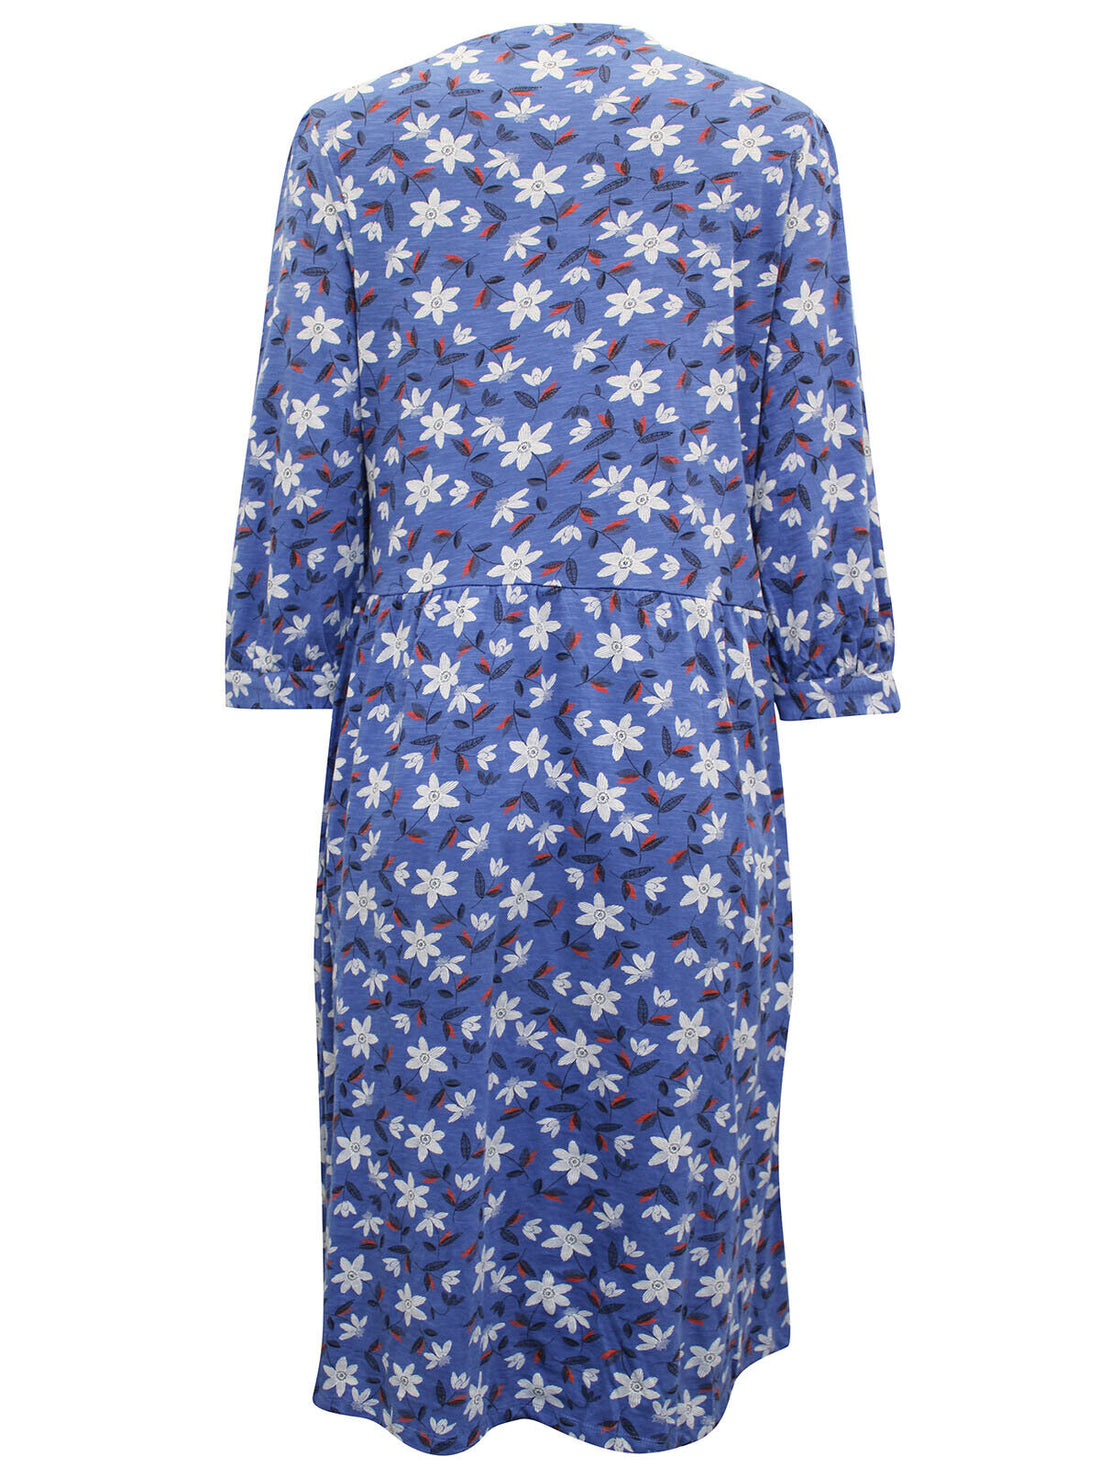 EX Seasalt Blue Wood Anemone Pier Chycarne Jersey Dress in Sizes 8-28 RRP£65